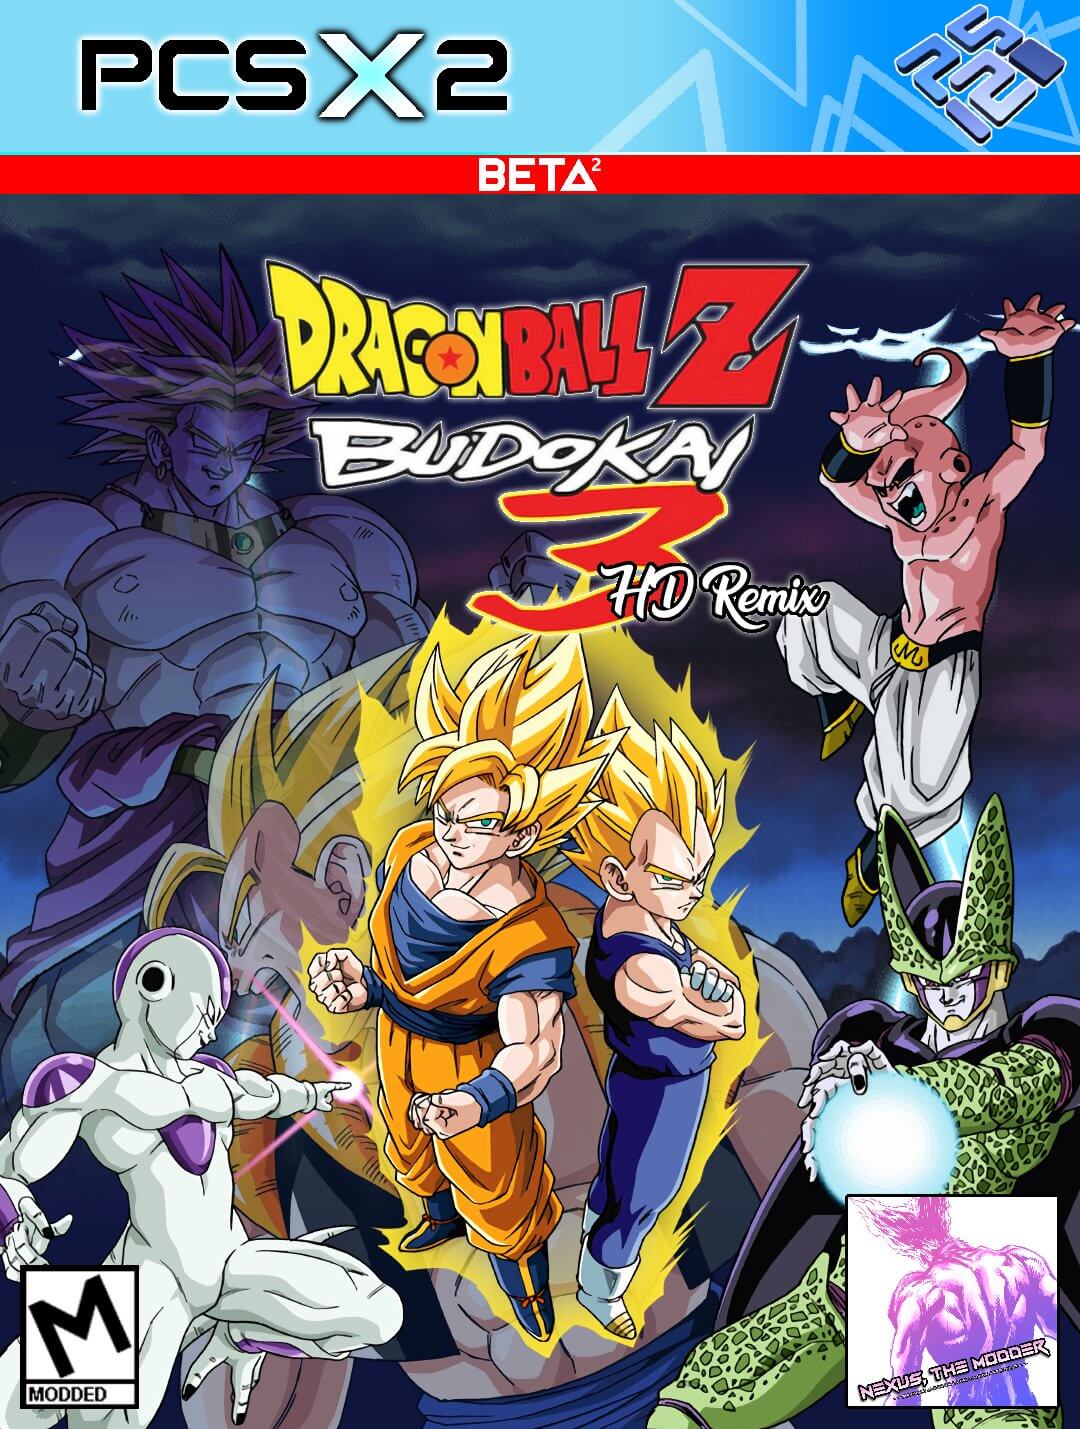 Dragon Ball Z Budokai 3 Hd Remix Playstation 2 Roms Hack Download